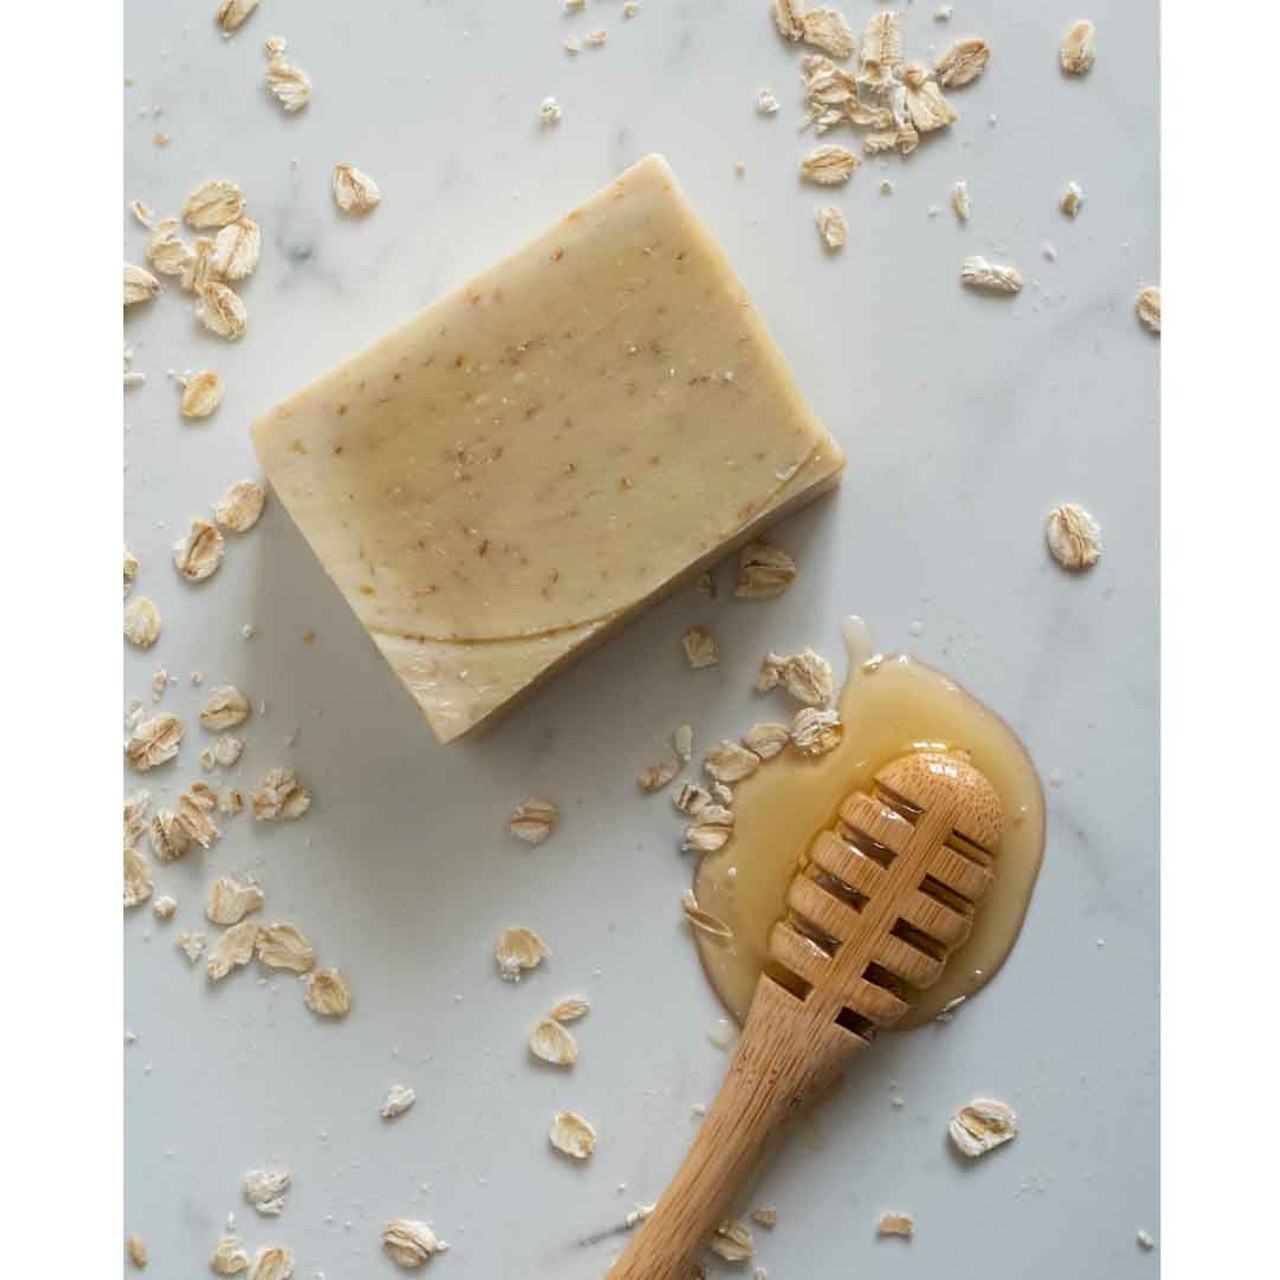 Almond Honey Oatmeal Soap – Atomic Polish